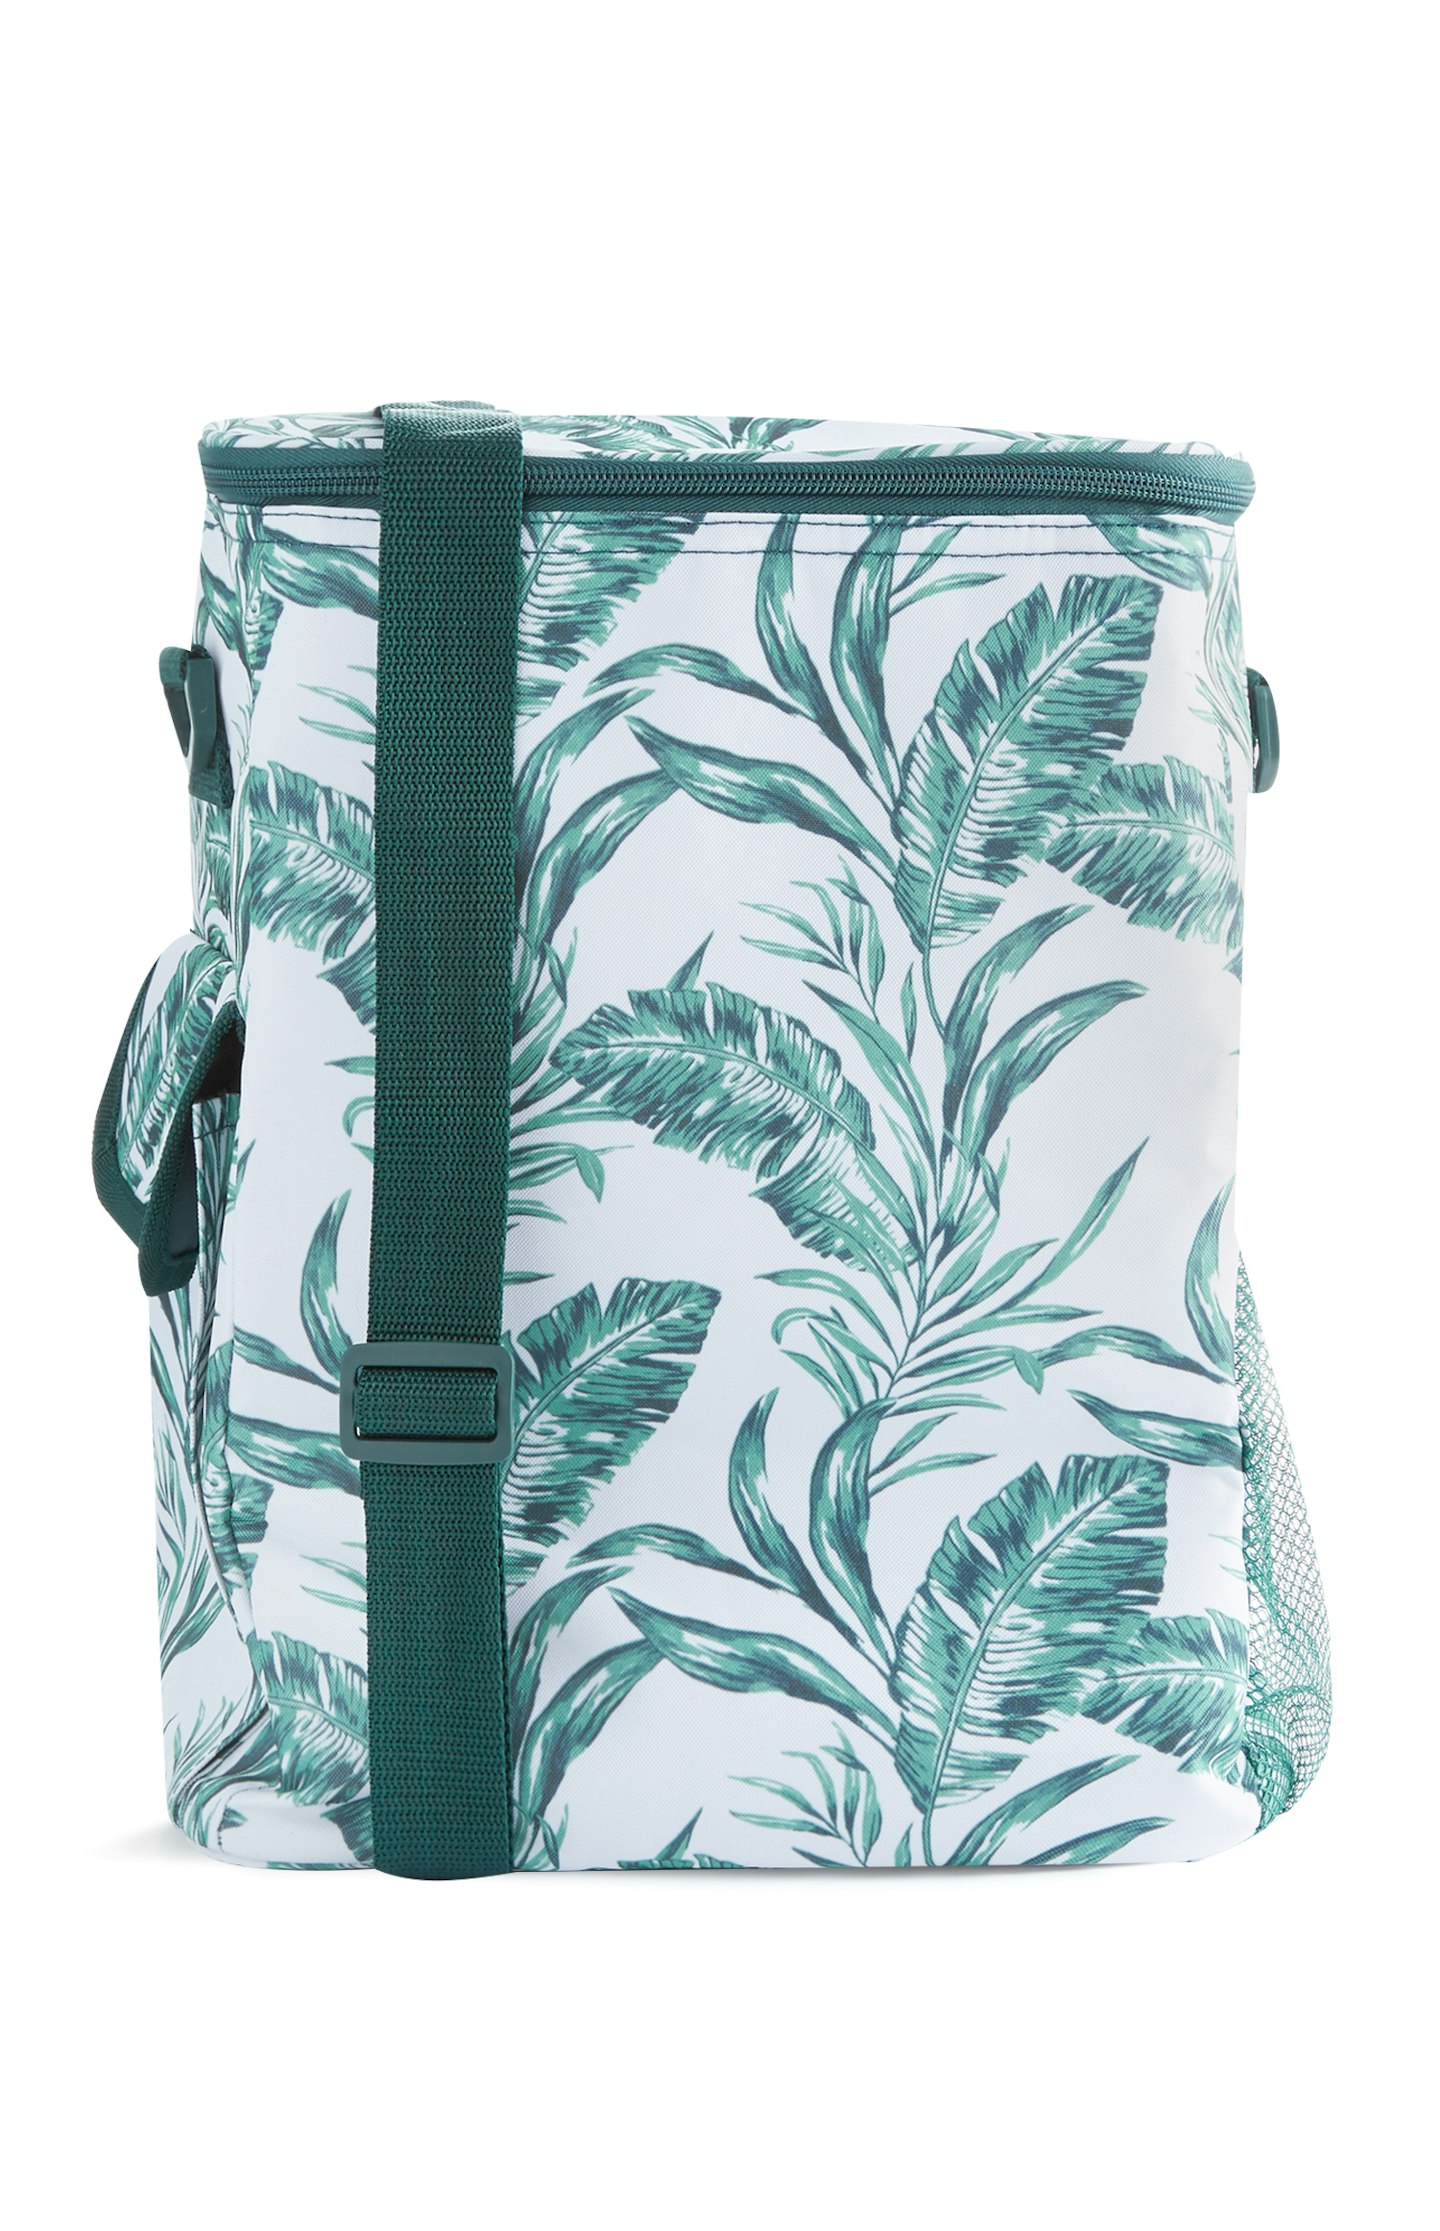 White And Green Leaf Print Cooler Bag £7